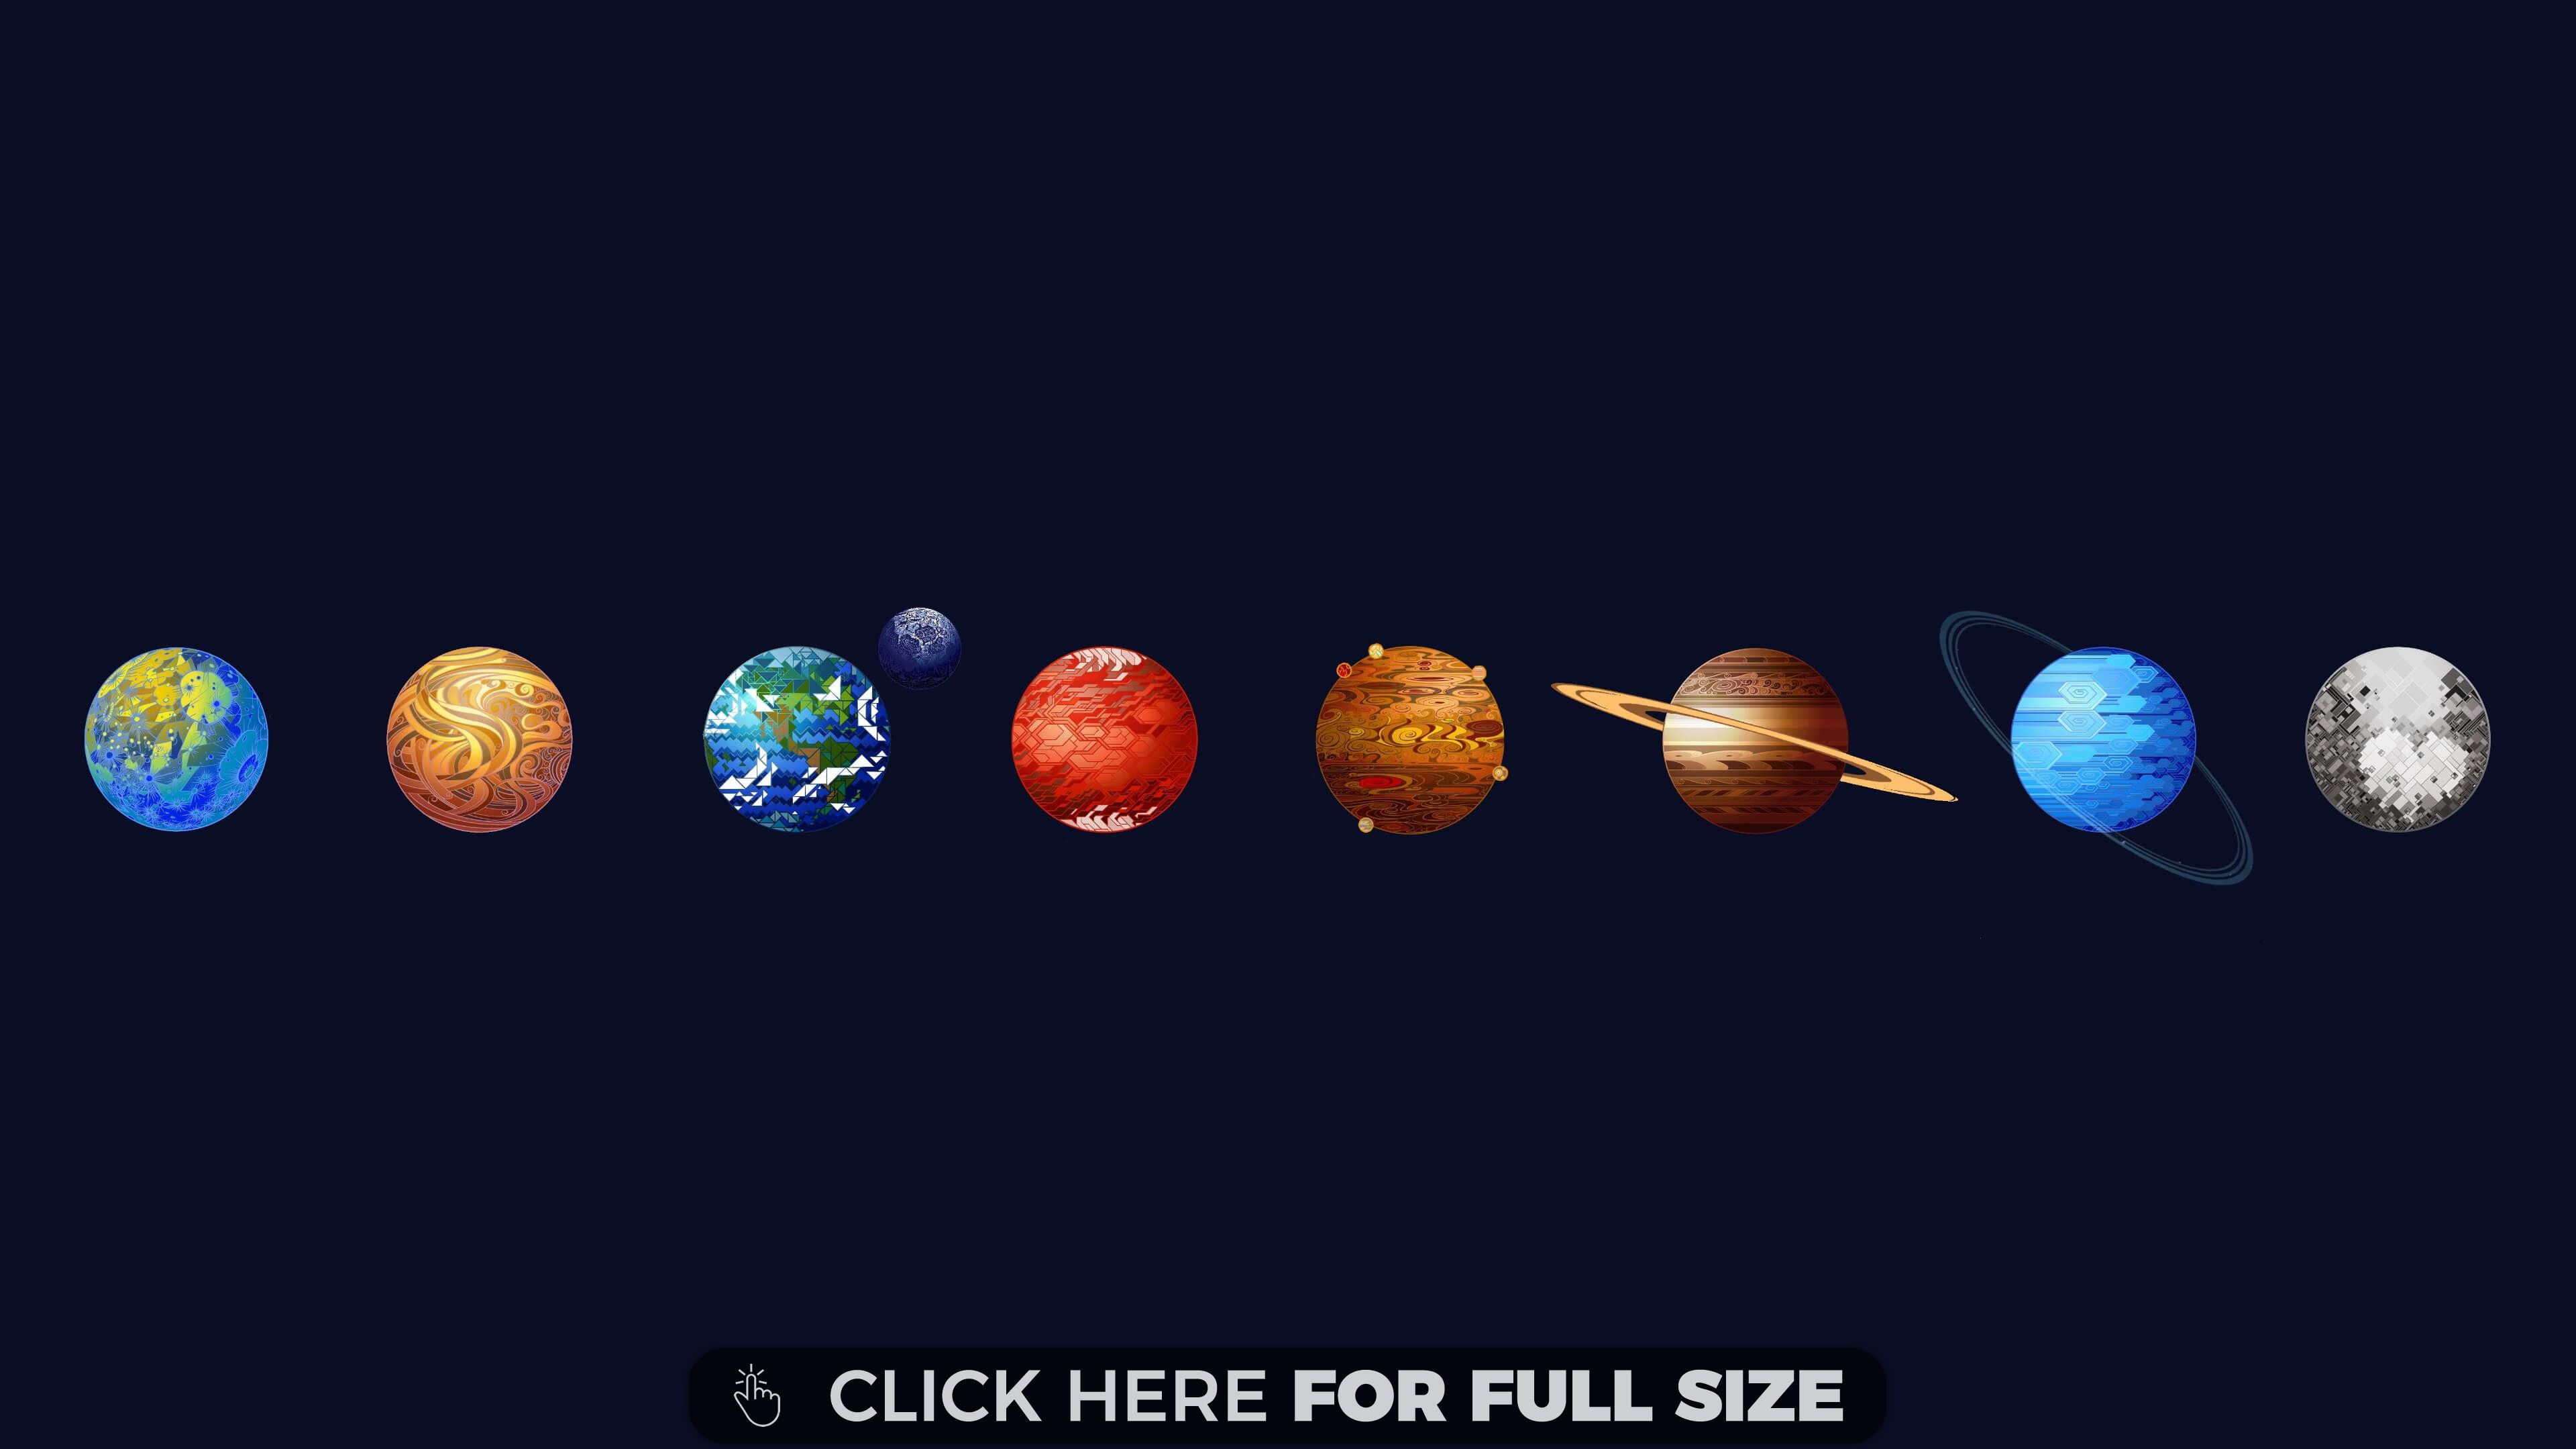 [75+] Solar System Backgrounds | WallpaperSafari.com